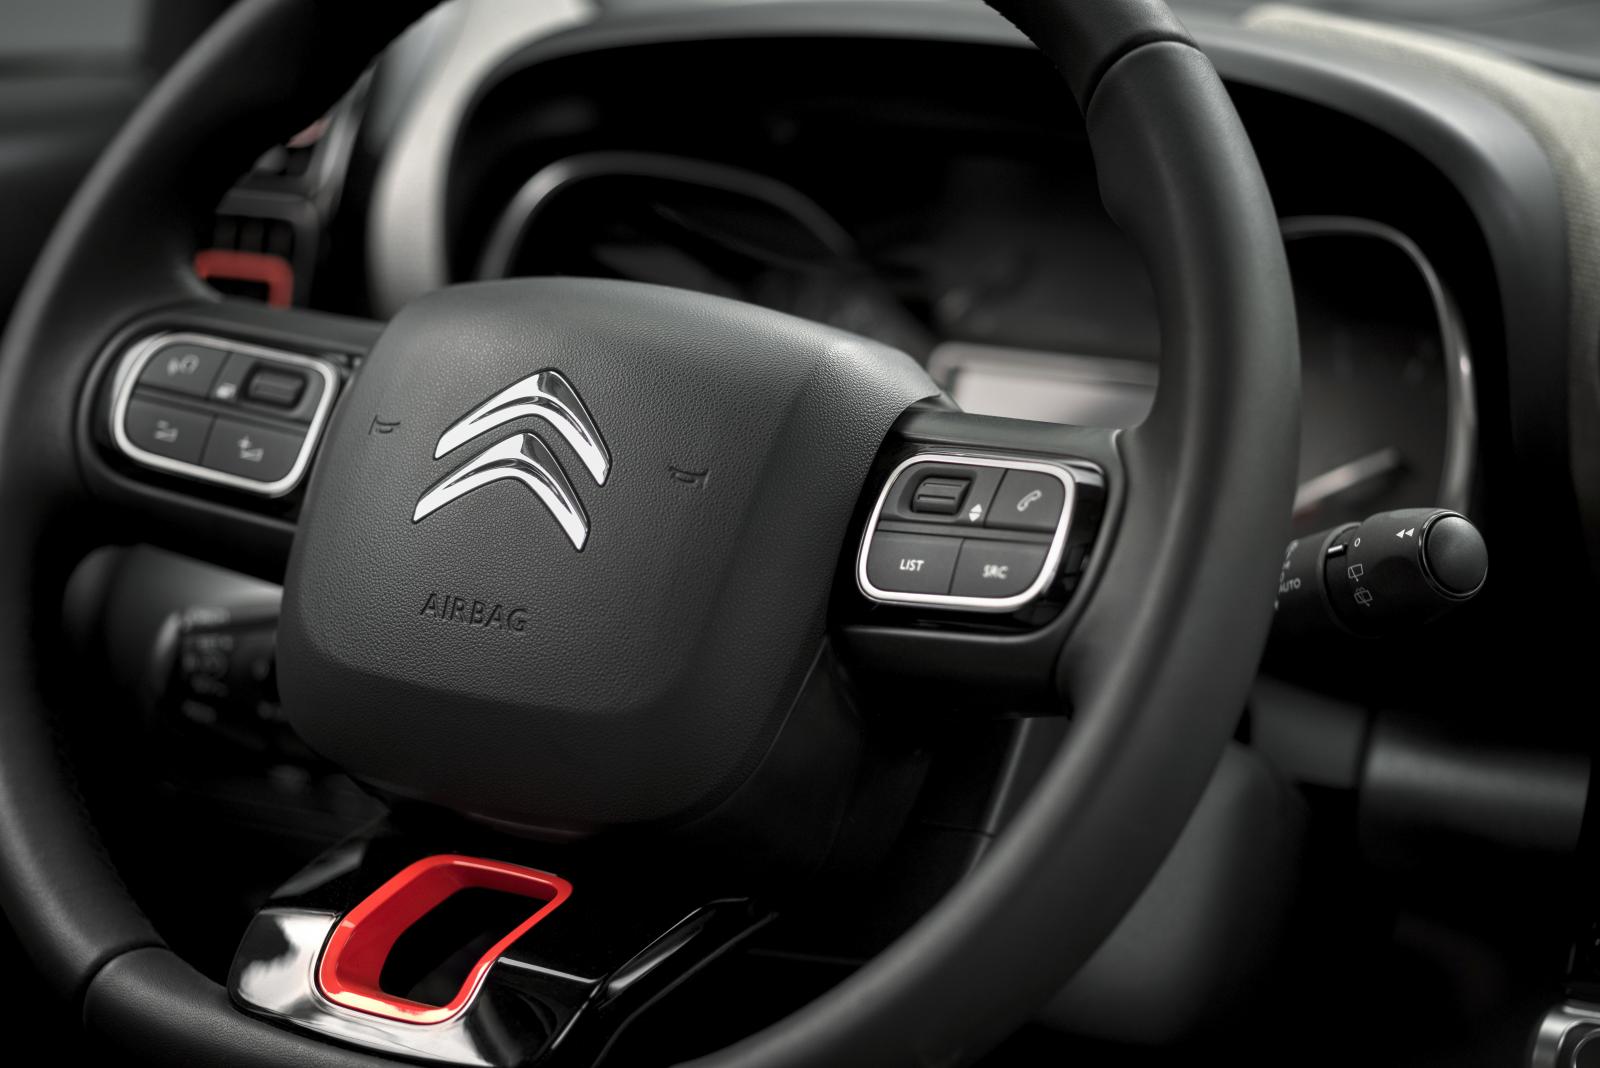 C3 Aircross Compact SUV - Steering wheel